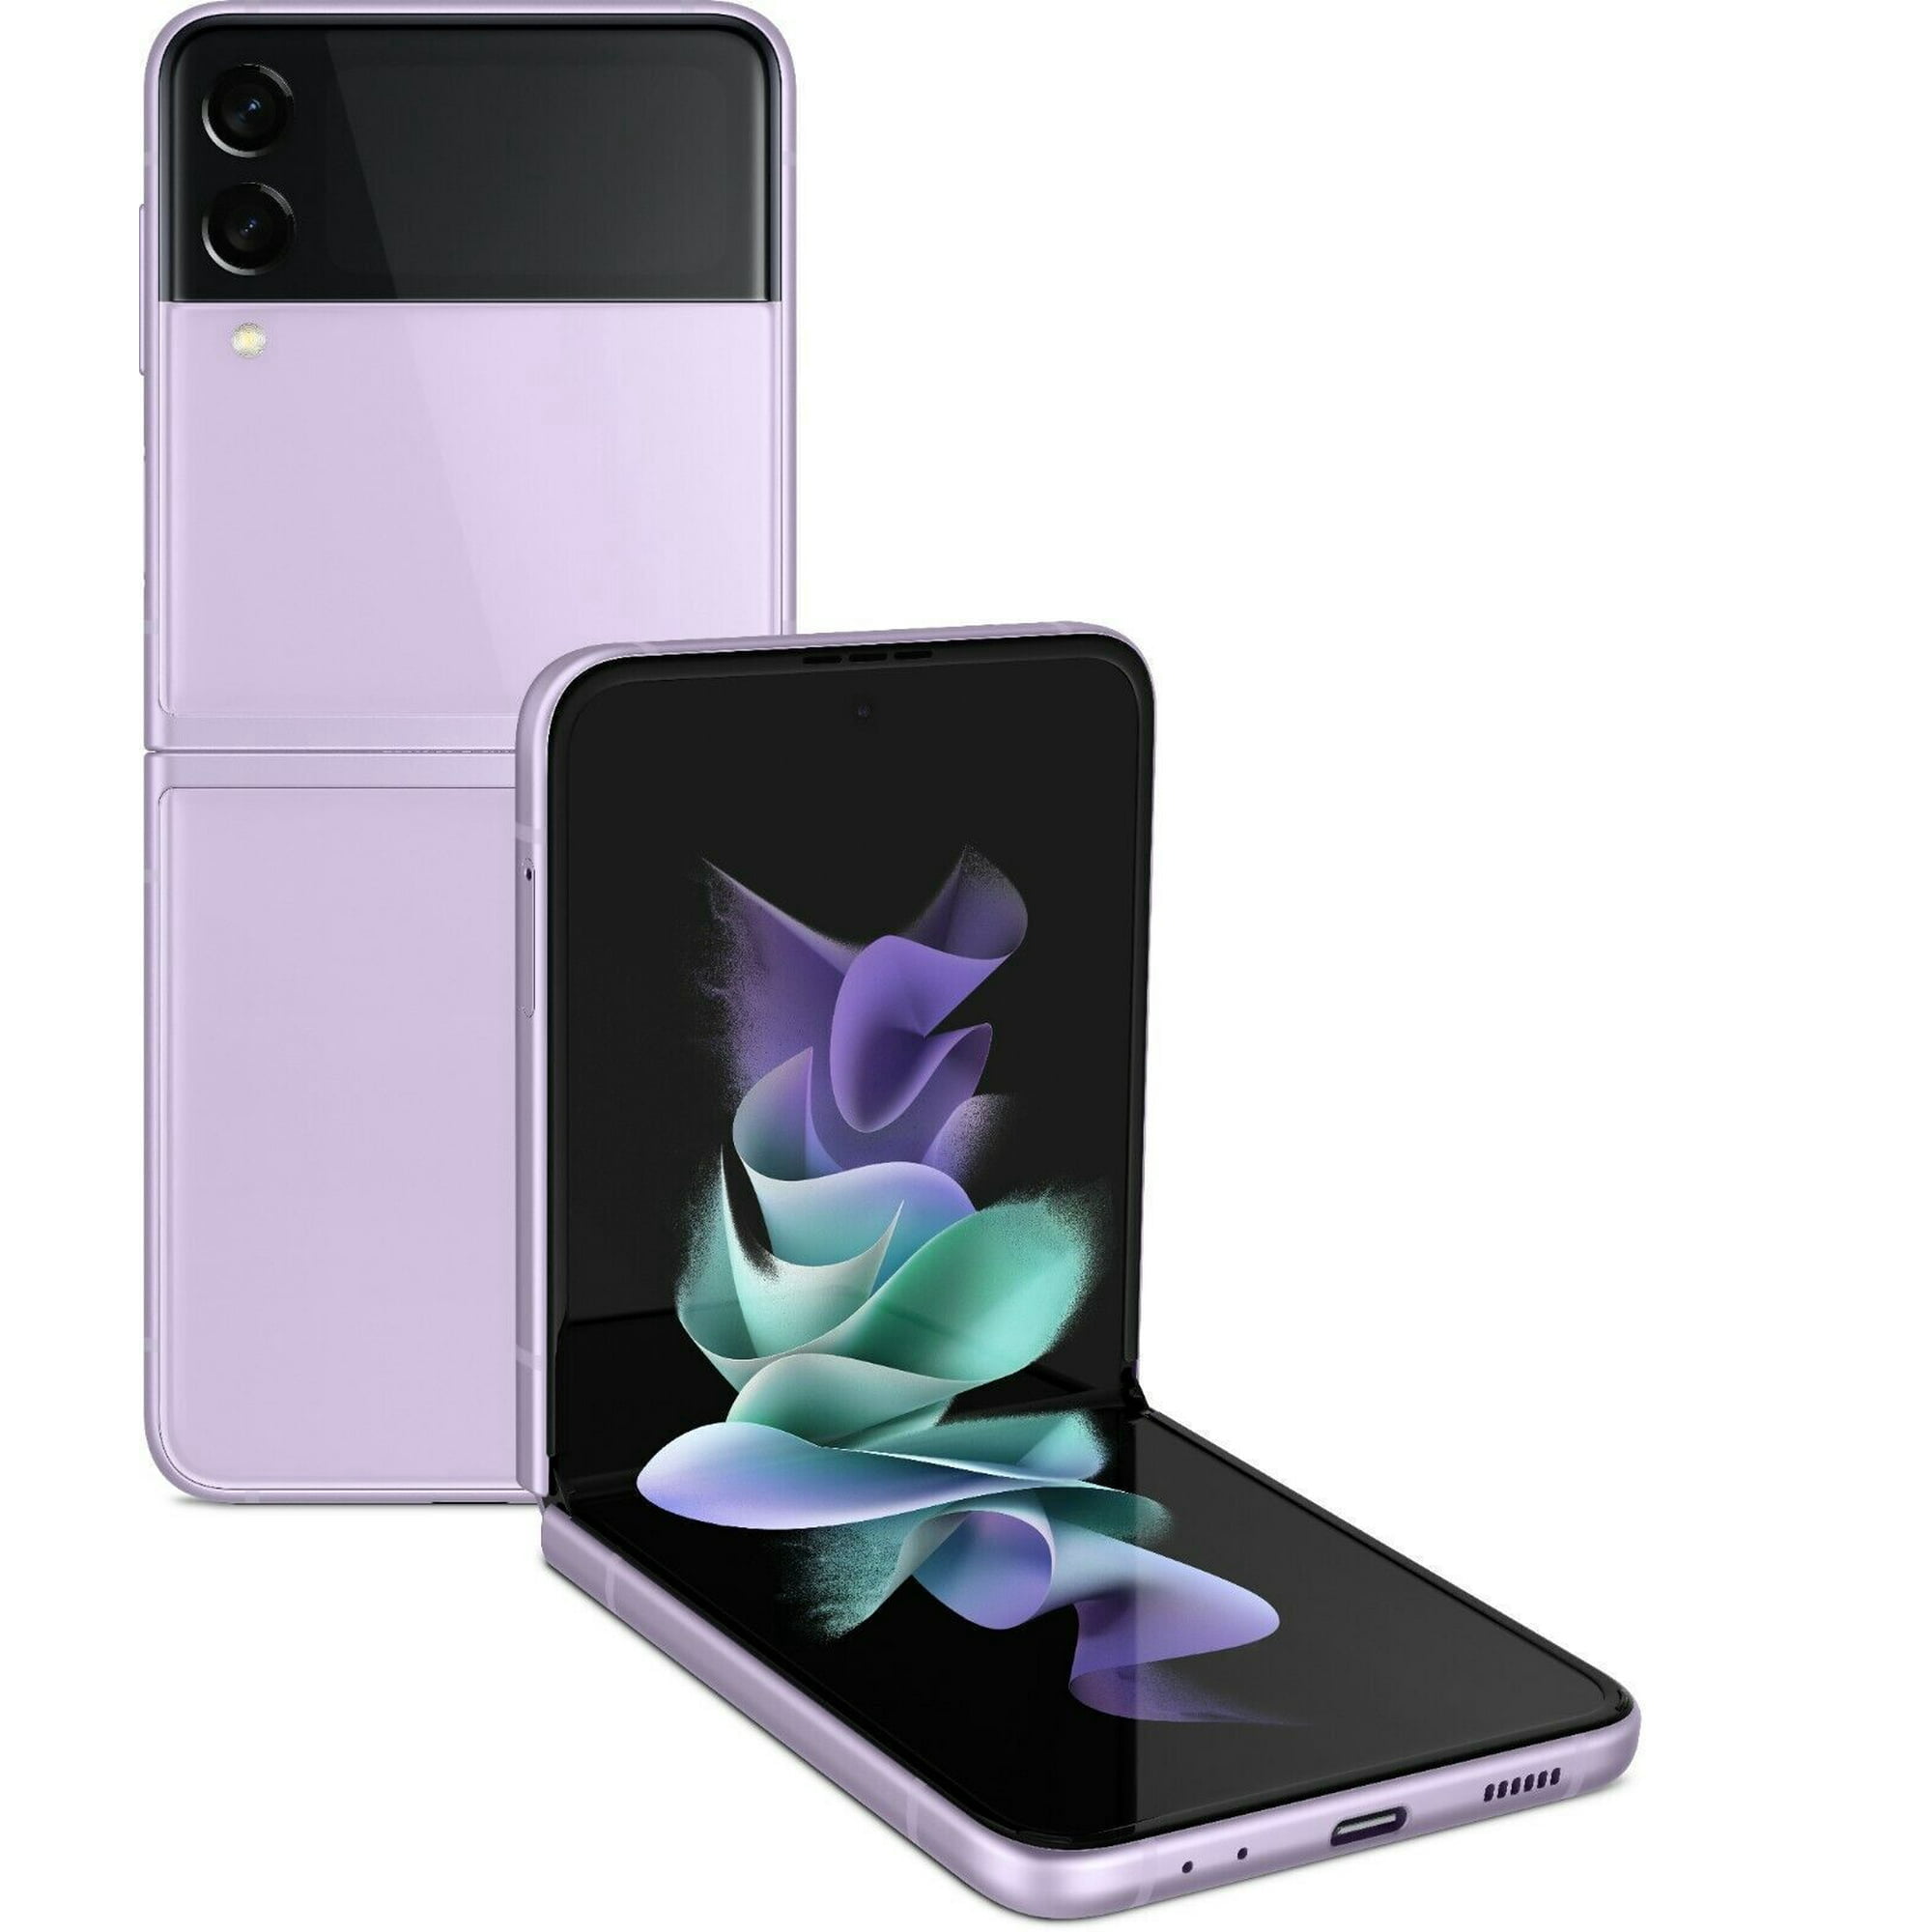 Samsung Galaxy Z Flip 3 5G SM-F711U1 256GB Purple (US Model) - Factory Unlocked Cell Phone - Very Good Condition - image 1 of 3